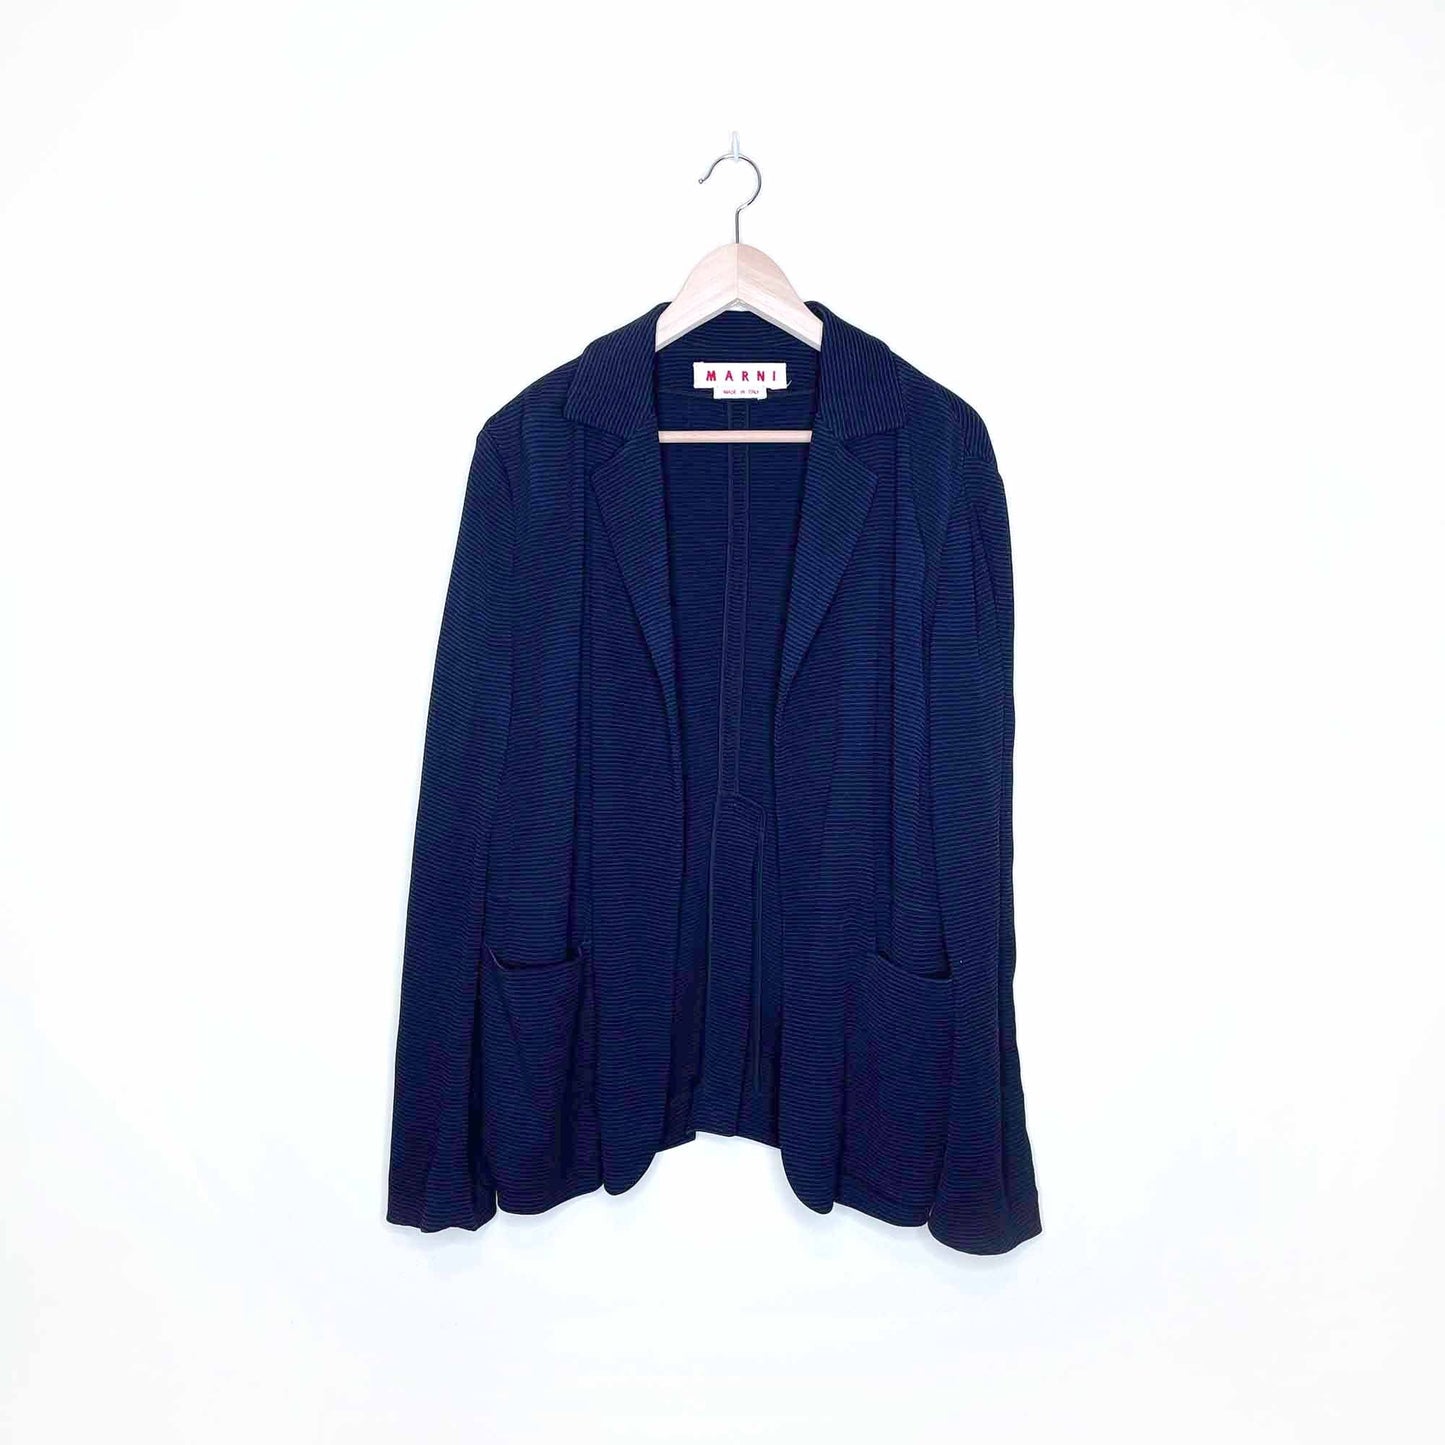 marni ribbed open viscose-cotton blazer jacket - size 44